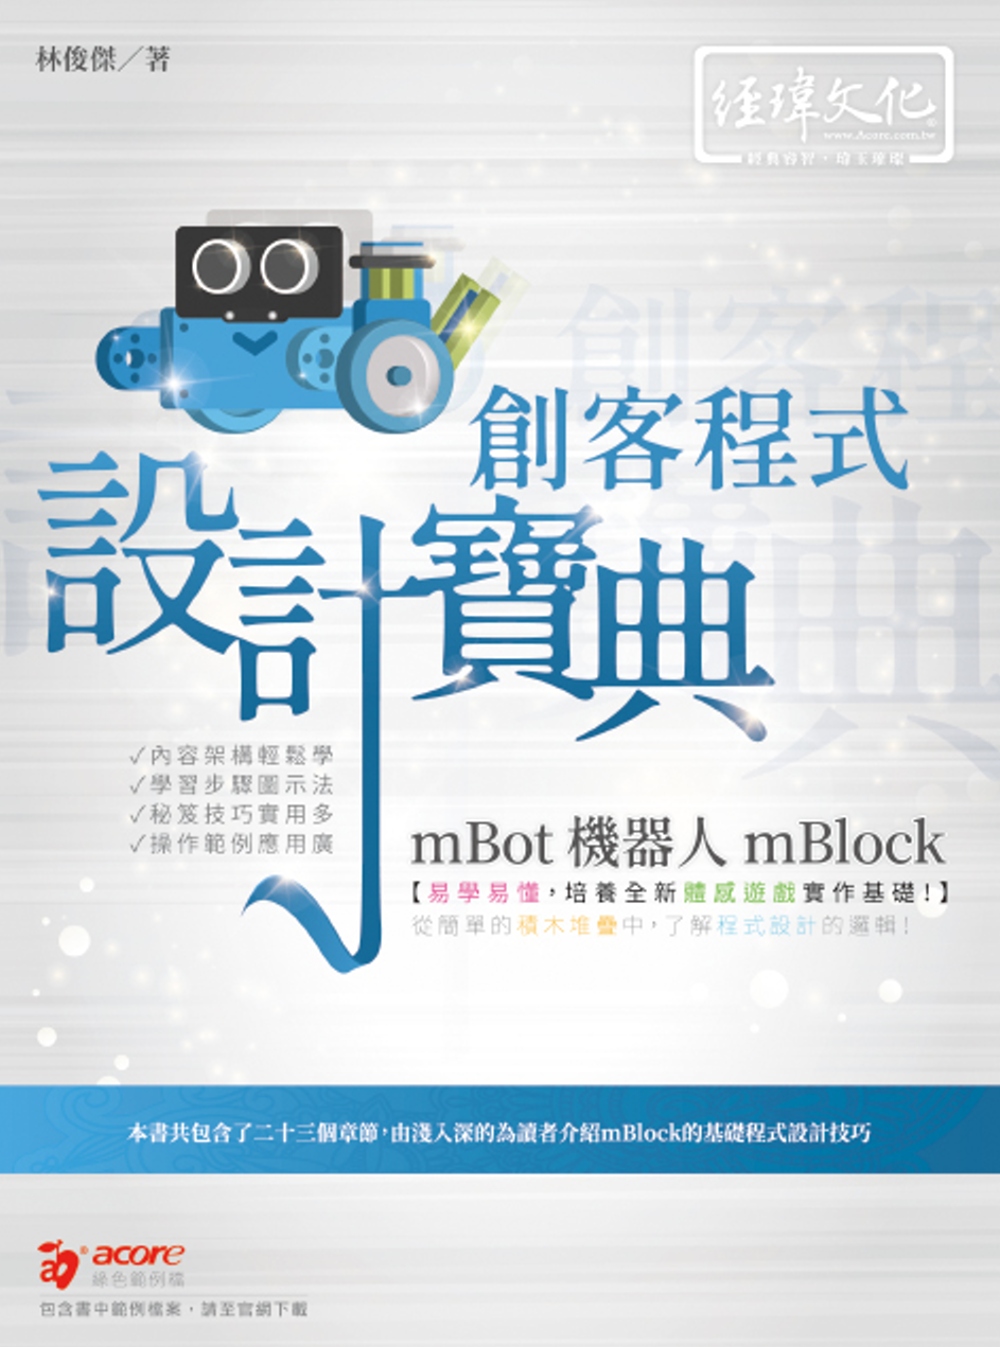 mBot 機器人 mBlock ...